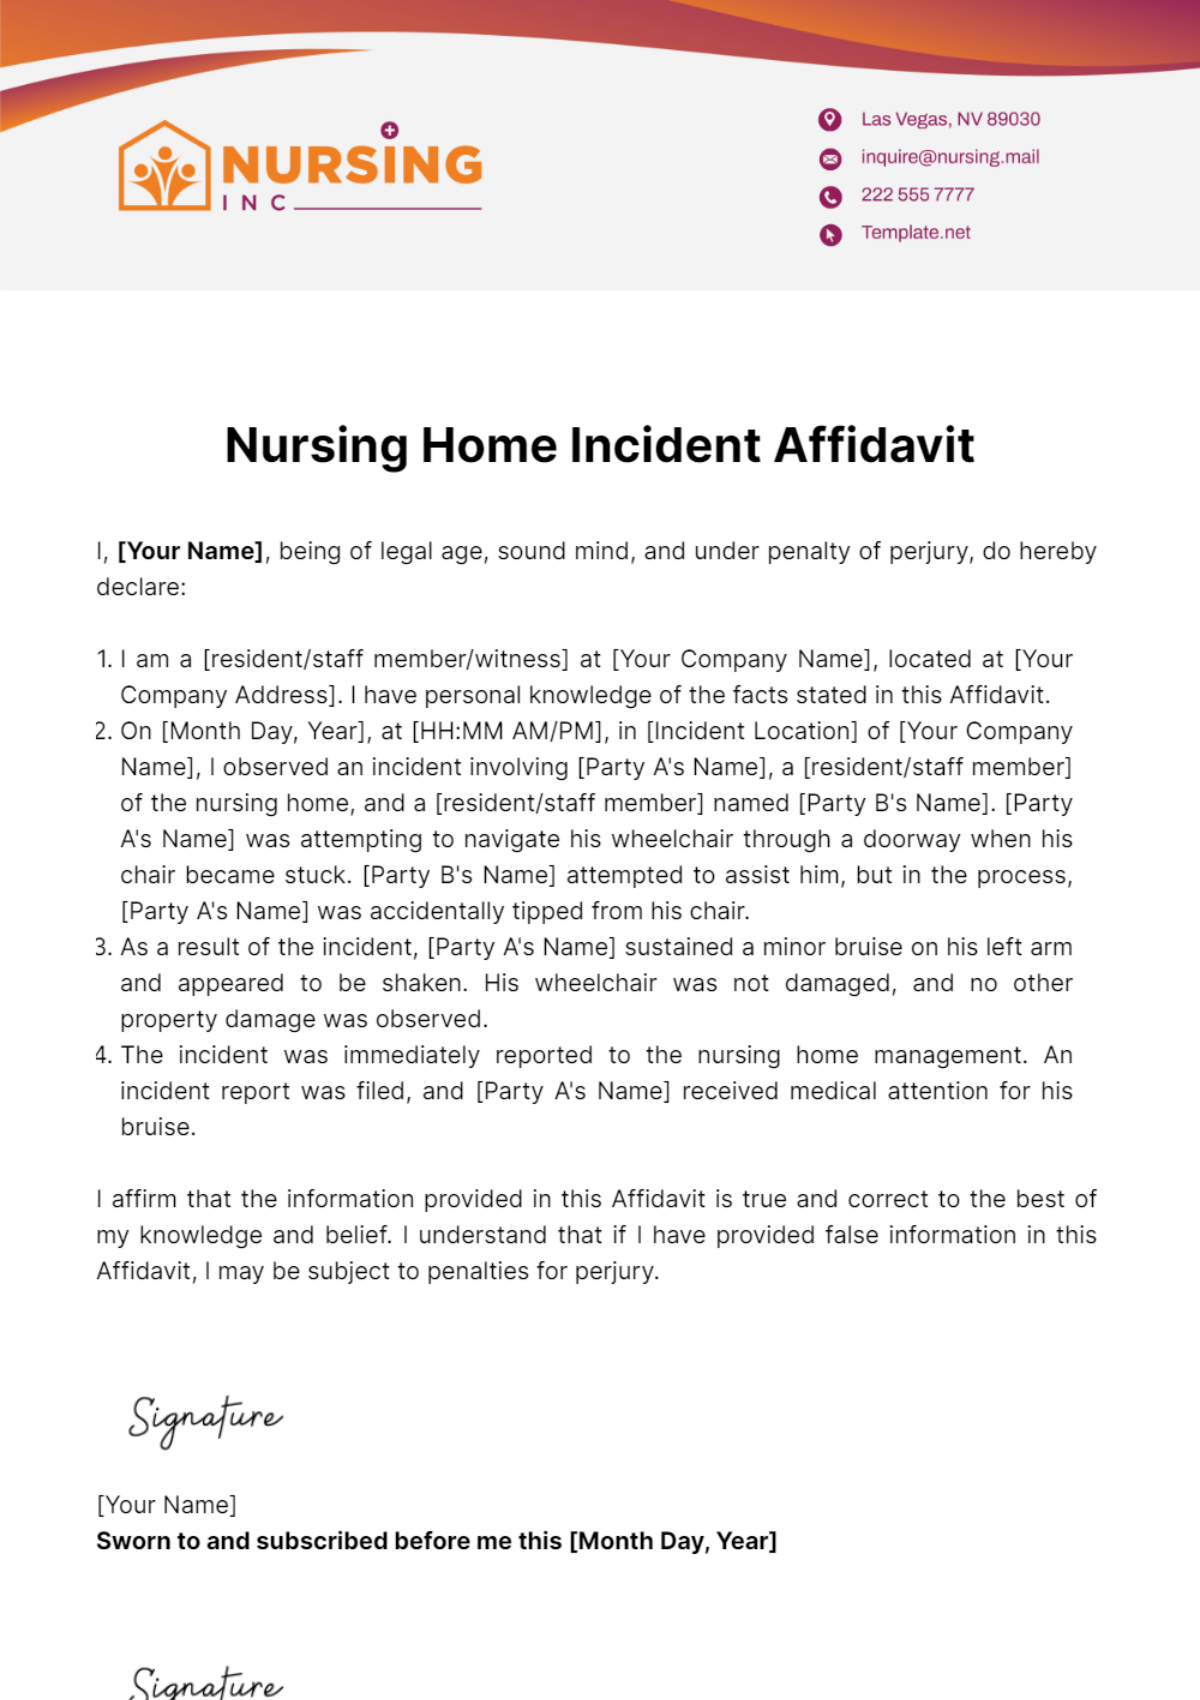 Nursing Home Incident Affidavit Template